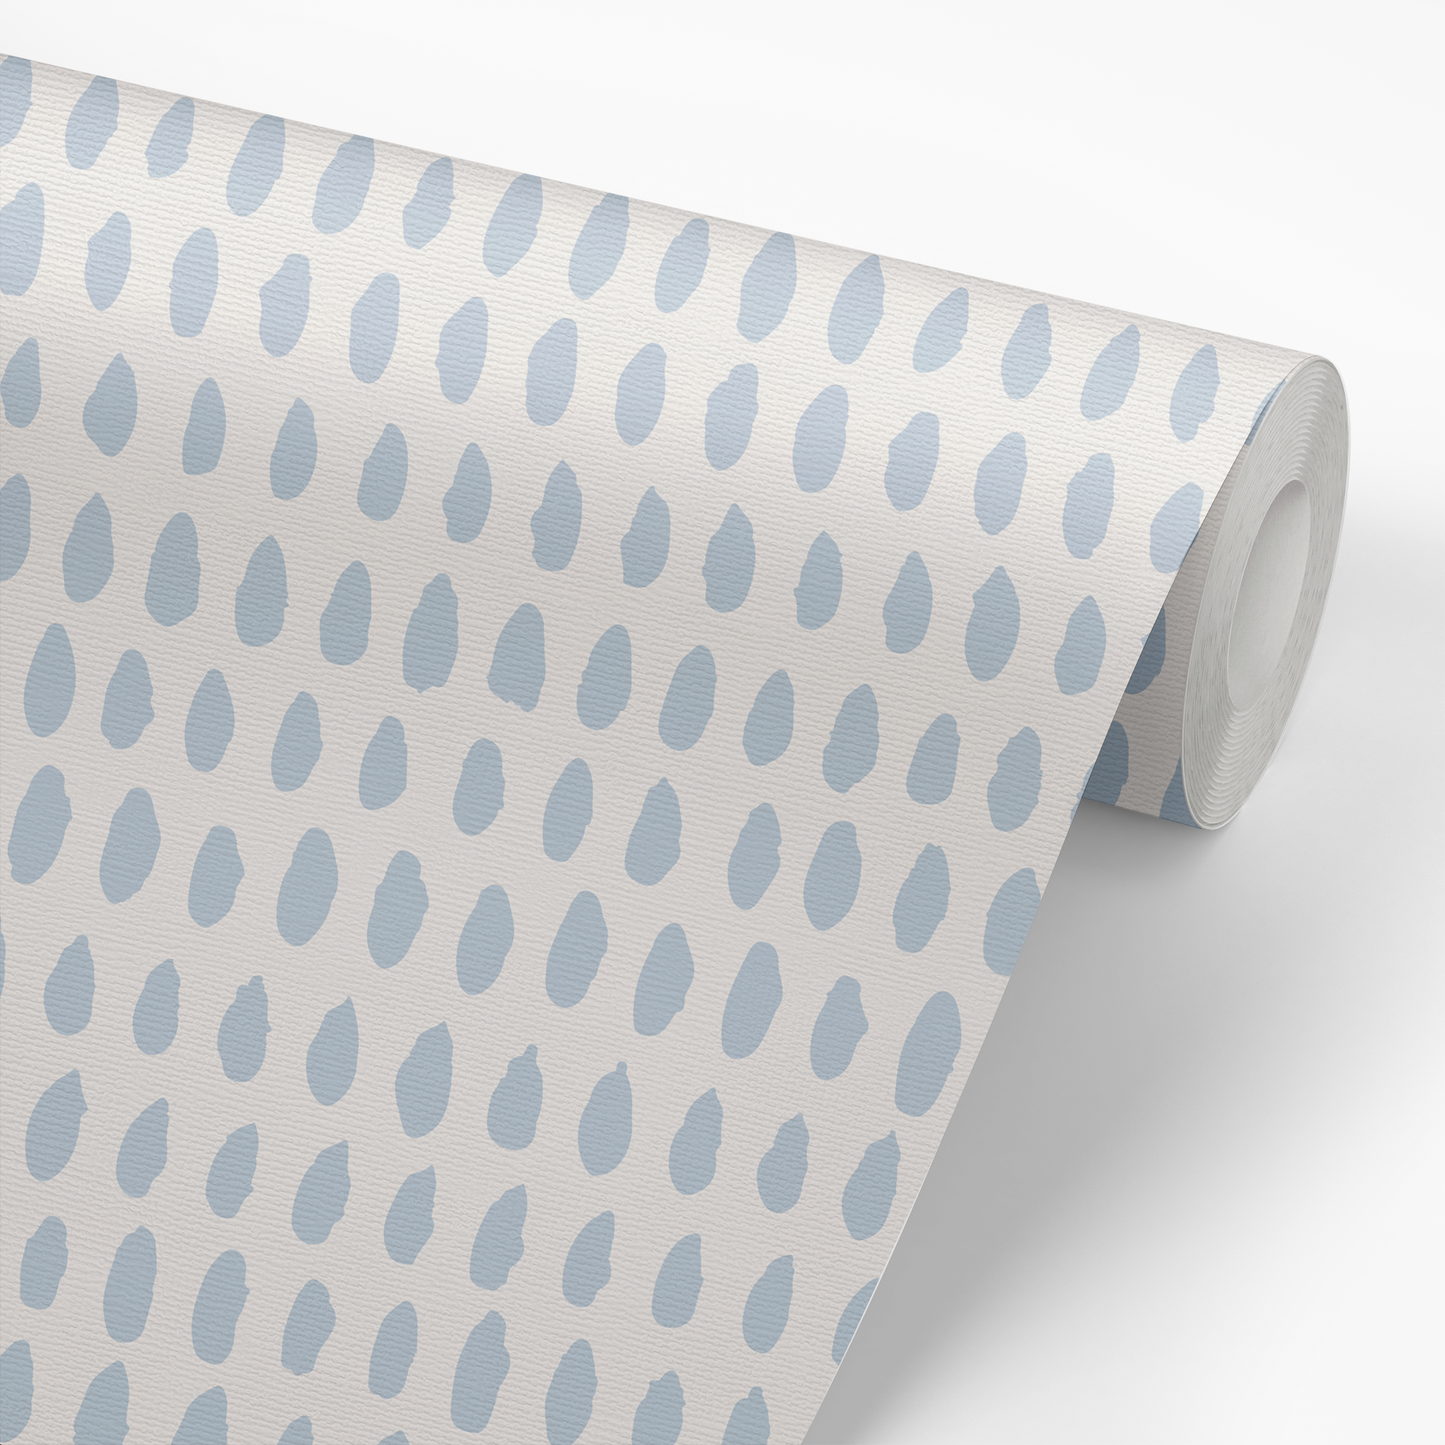 Rain Wallpaper - Light Gray Blue Drops